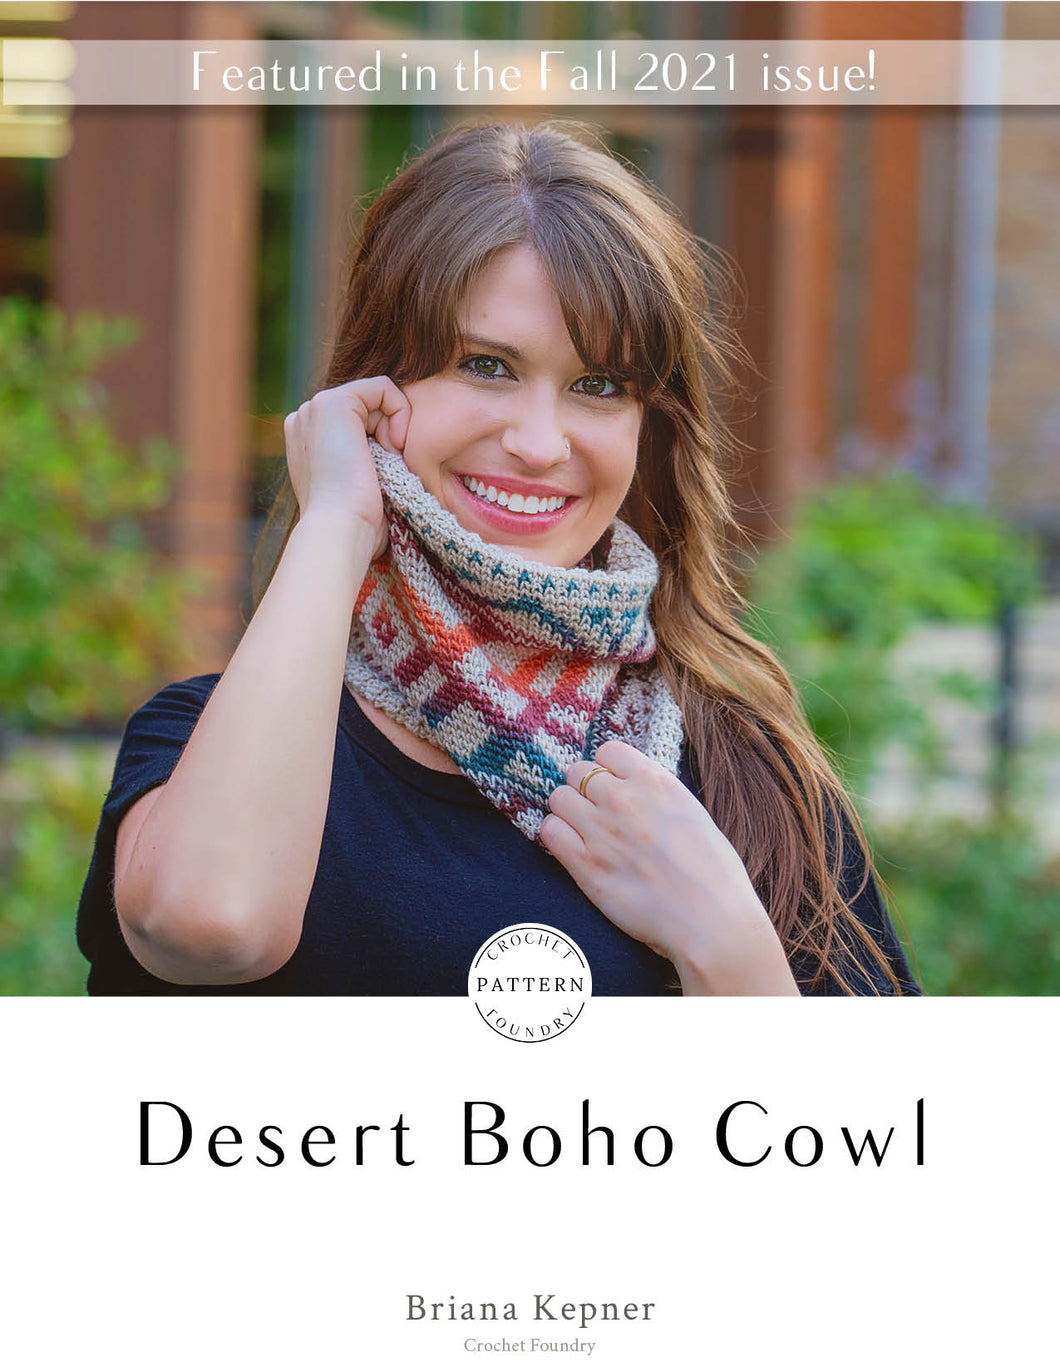 Desert Boho Cowl Crochet PDF Pattern by Briana Kepner